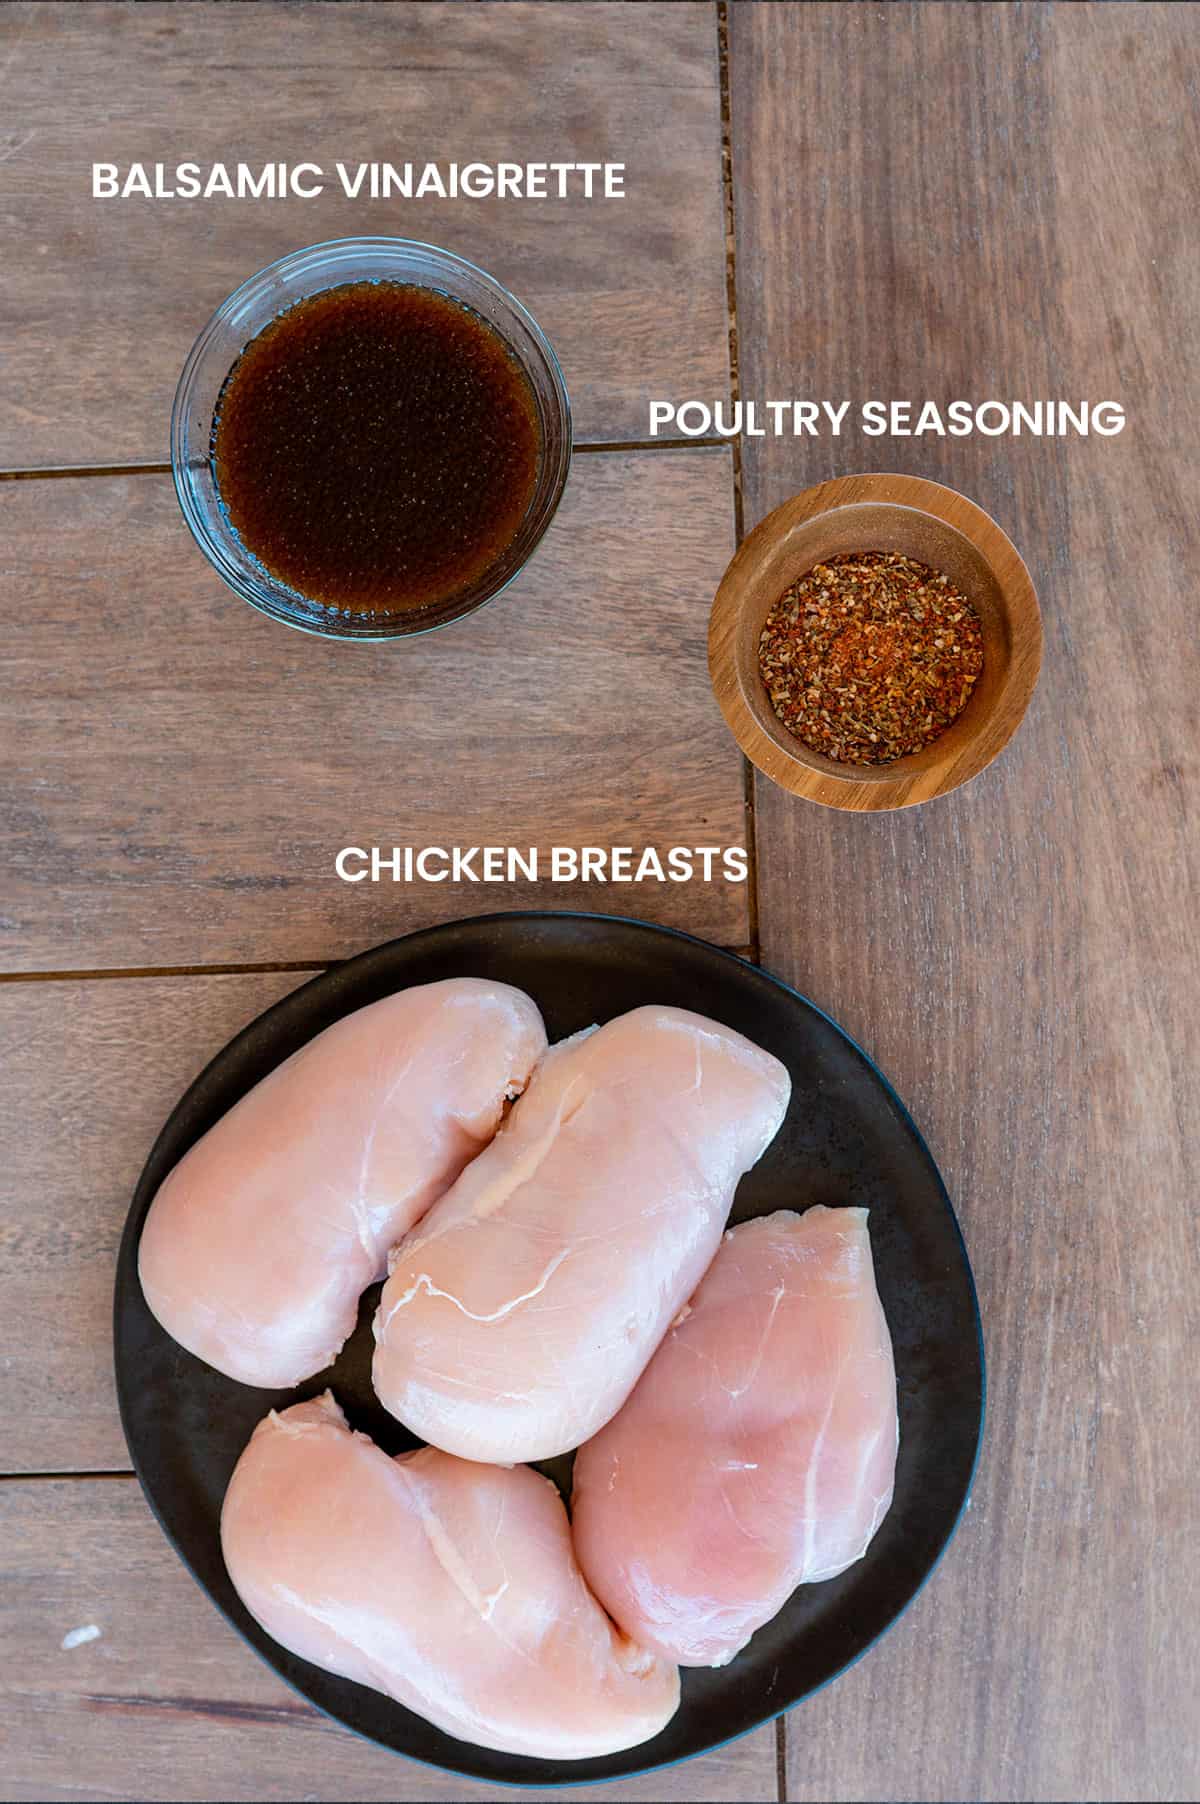 Ninja Grilled Chicken Breasts ingredients: chicken breasts, balsamic vinaigrette, poultry seasoning.